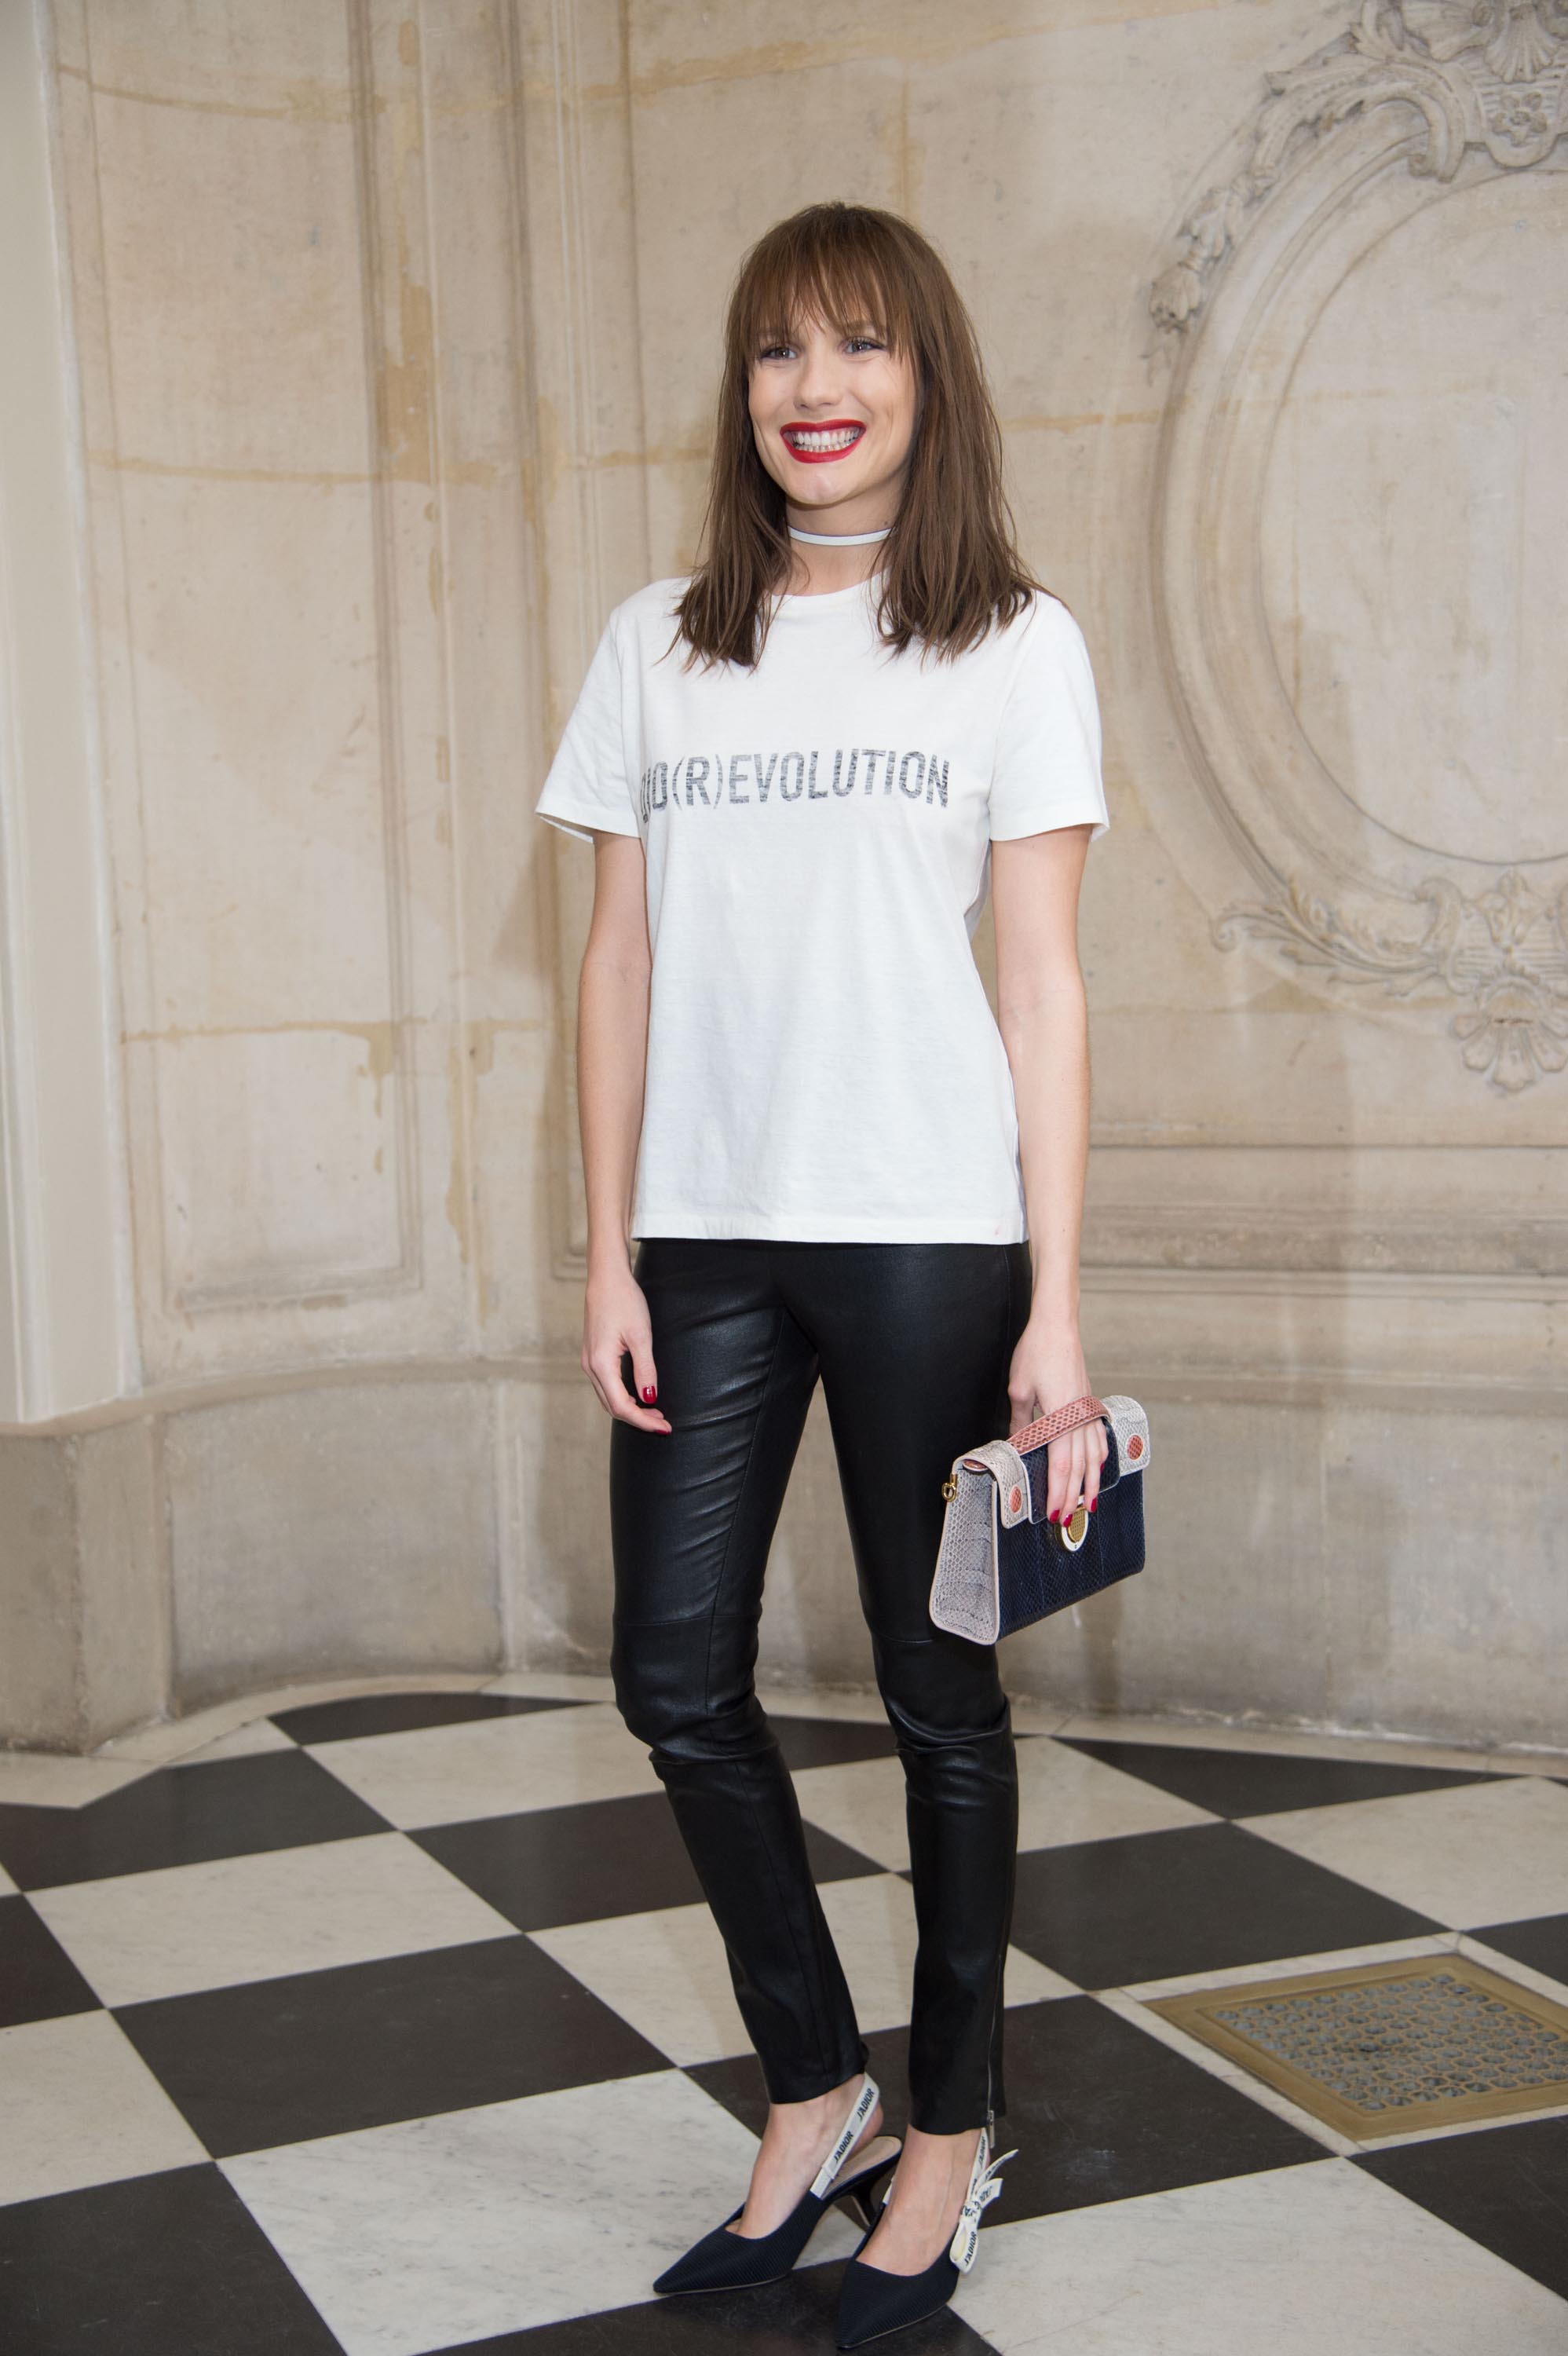 Ana Girardot attends the Christian Dior show